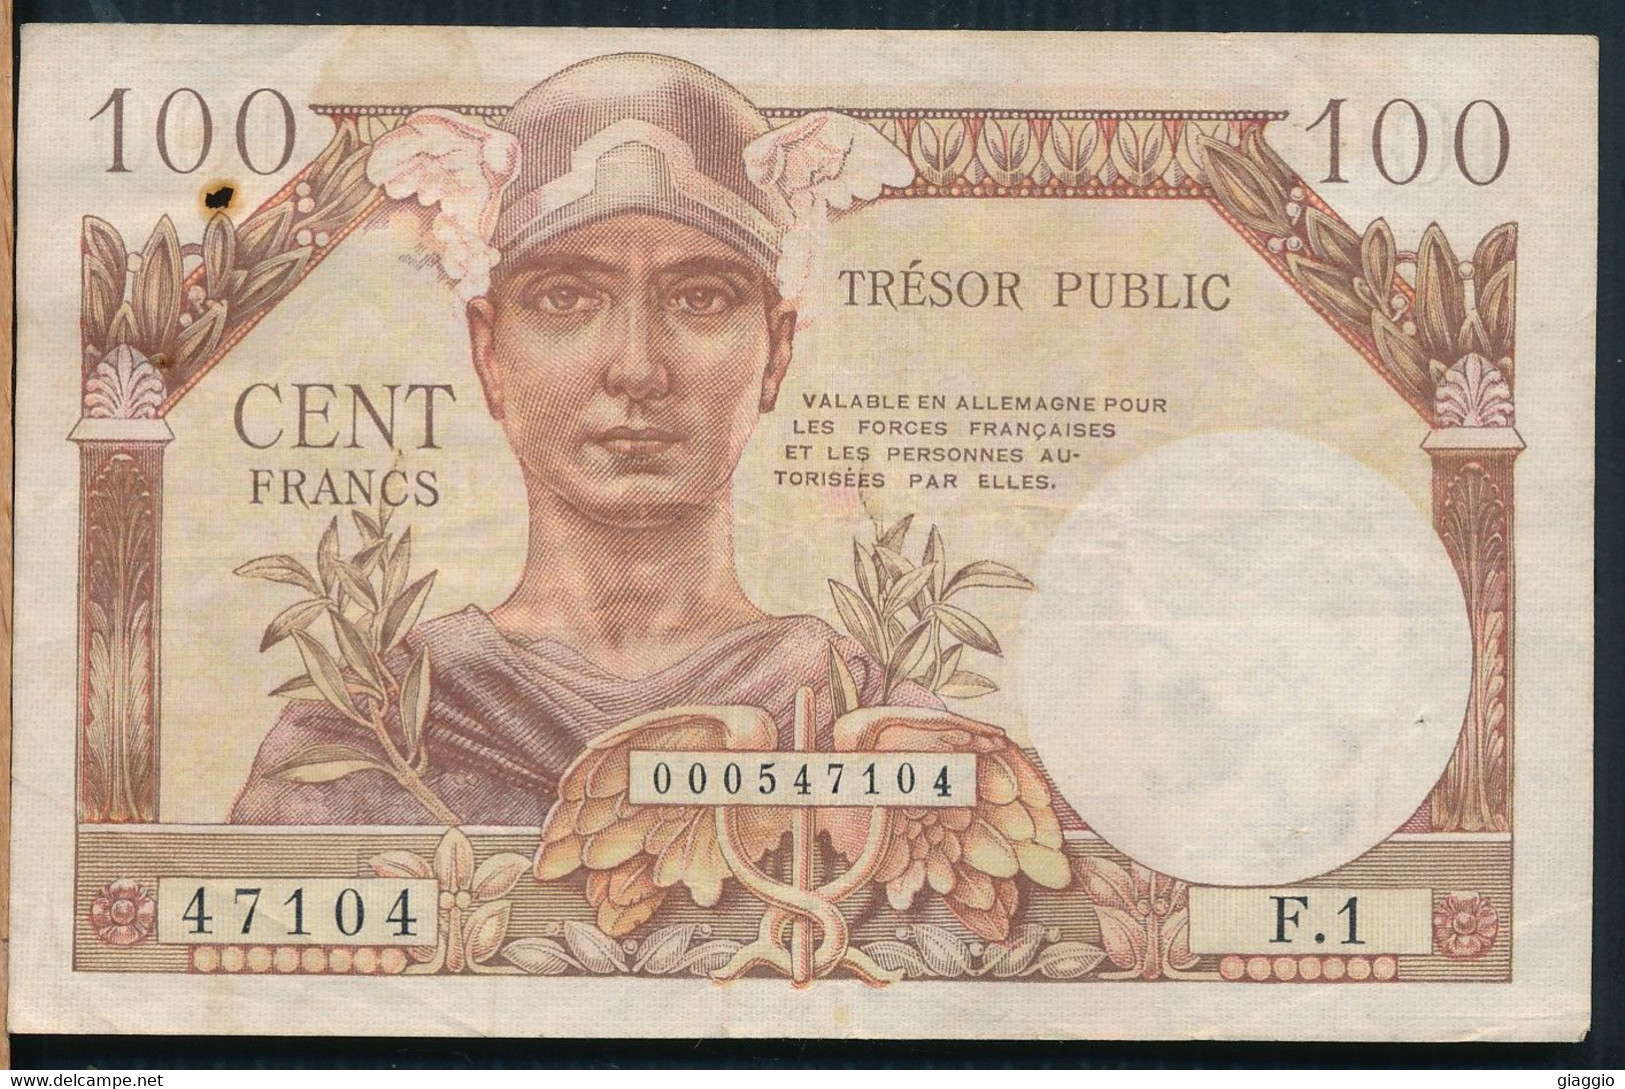 °°° FRANCE - 100 TRESOR PUBLIC °°° - 1955-1963 Staatskasse (Trésor Public)